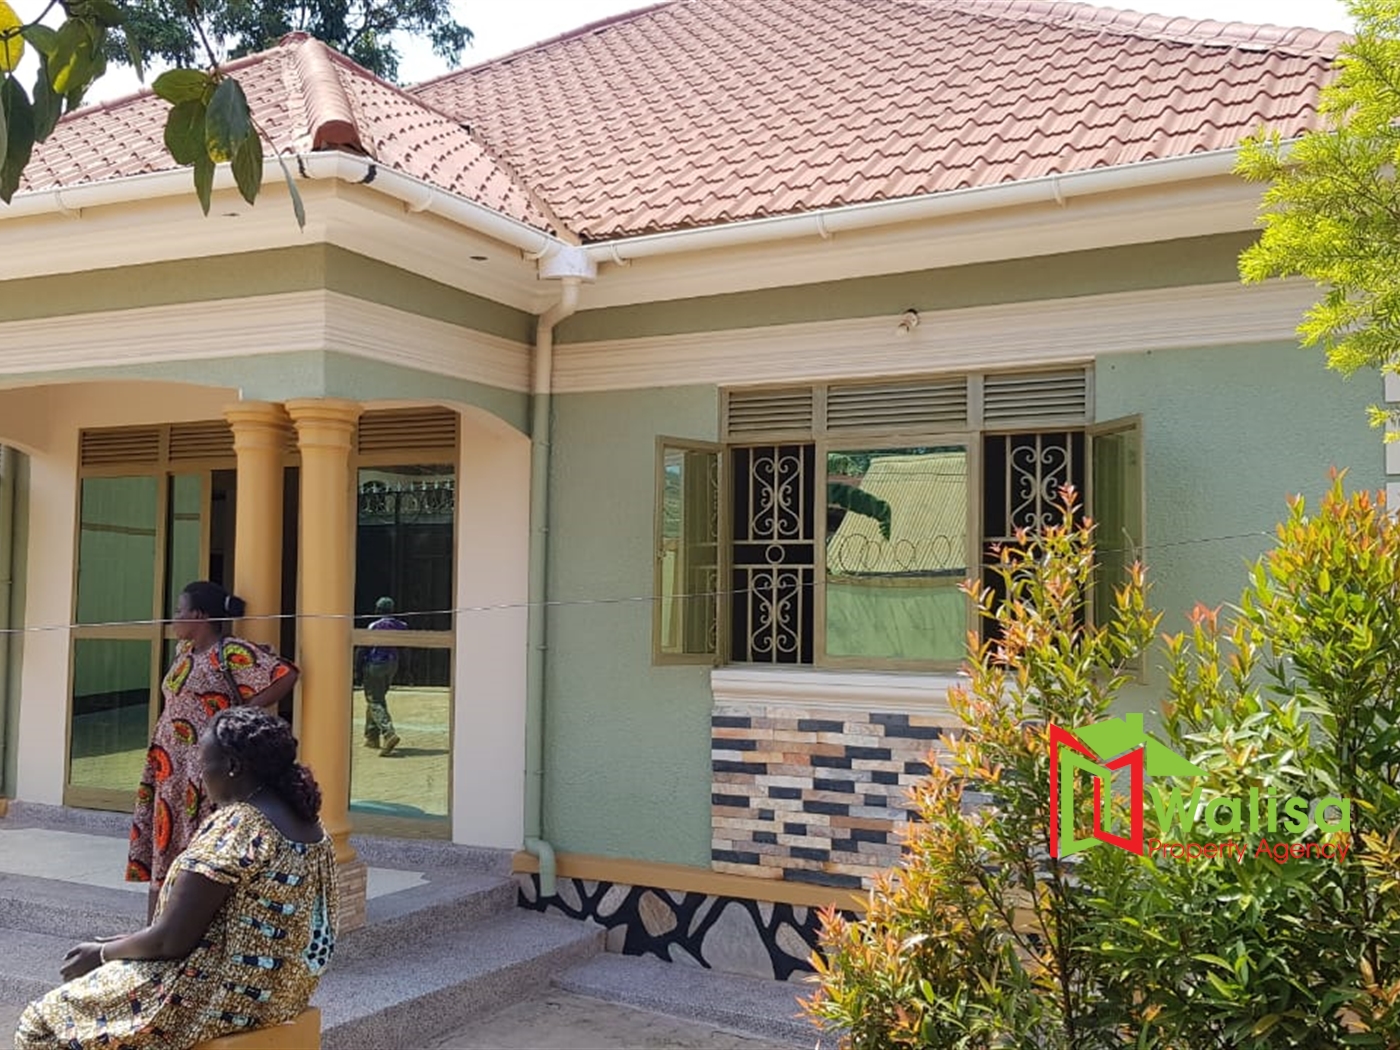 Town House for sale in Kitende Wakiso